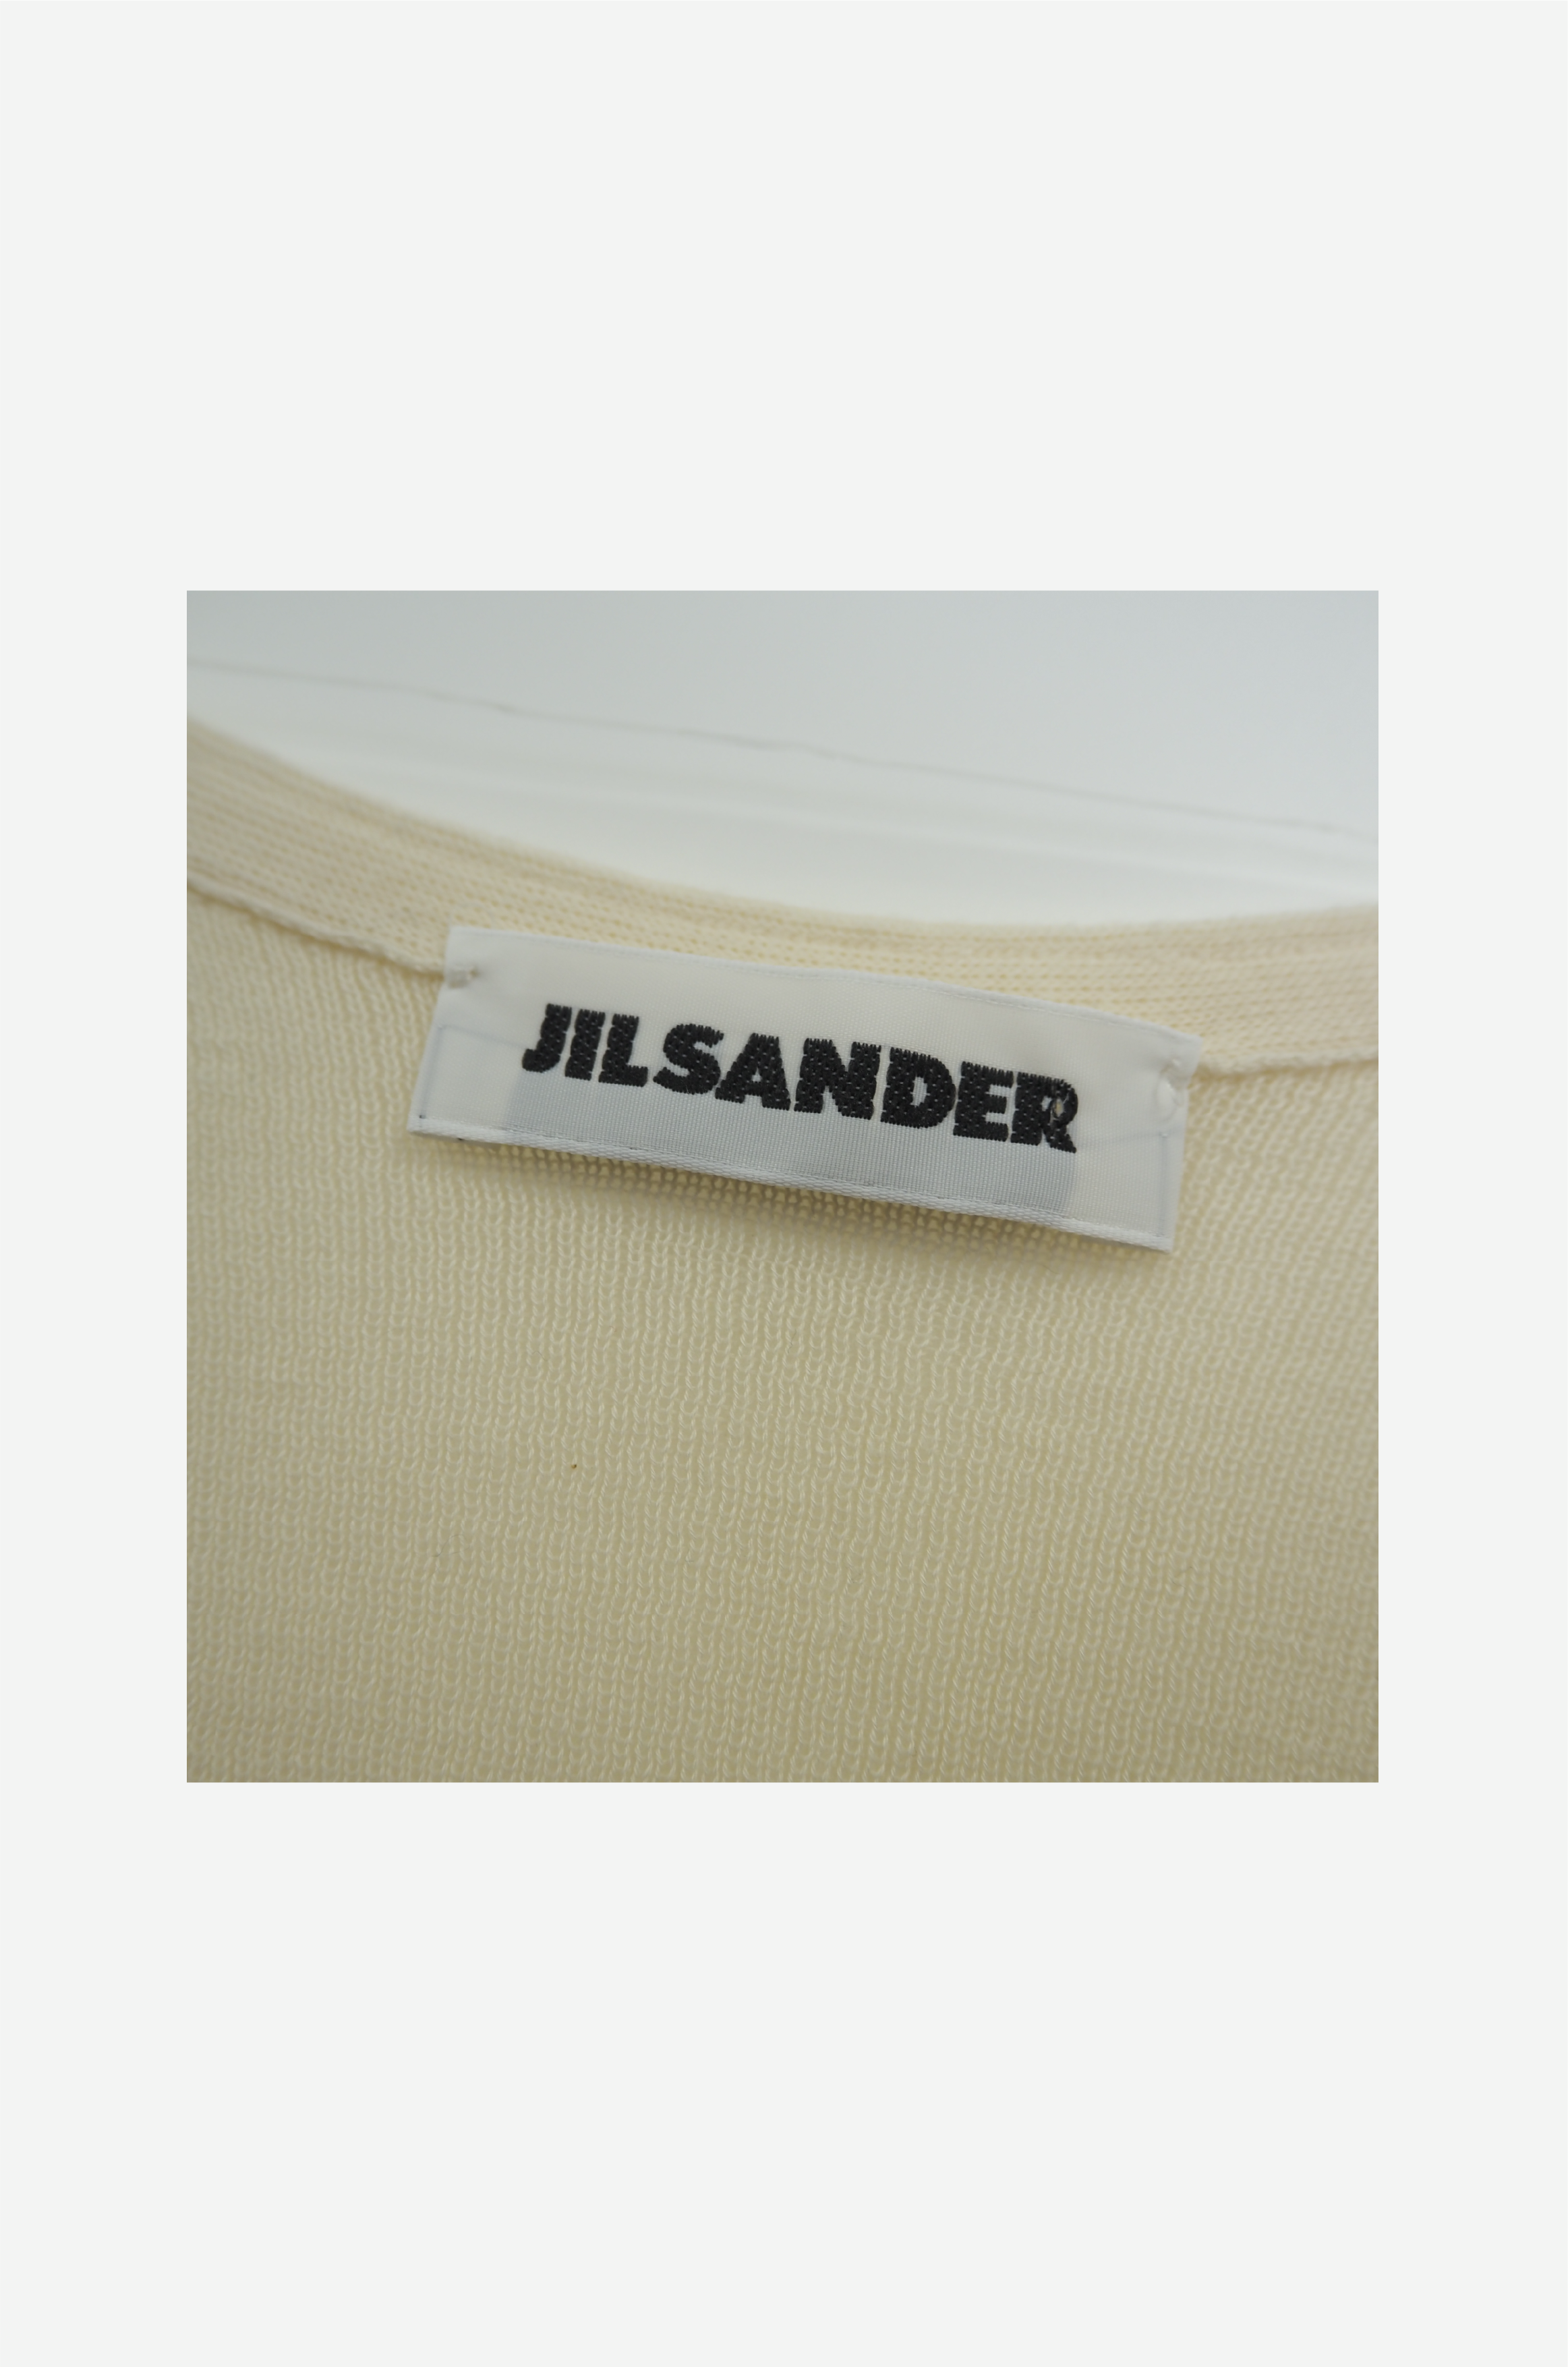 Archives Room: JIL SANDER T-shirt